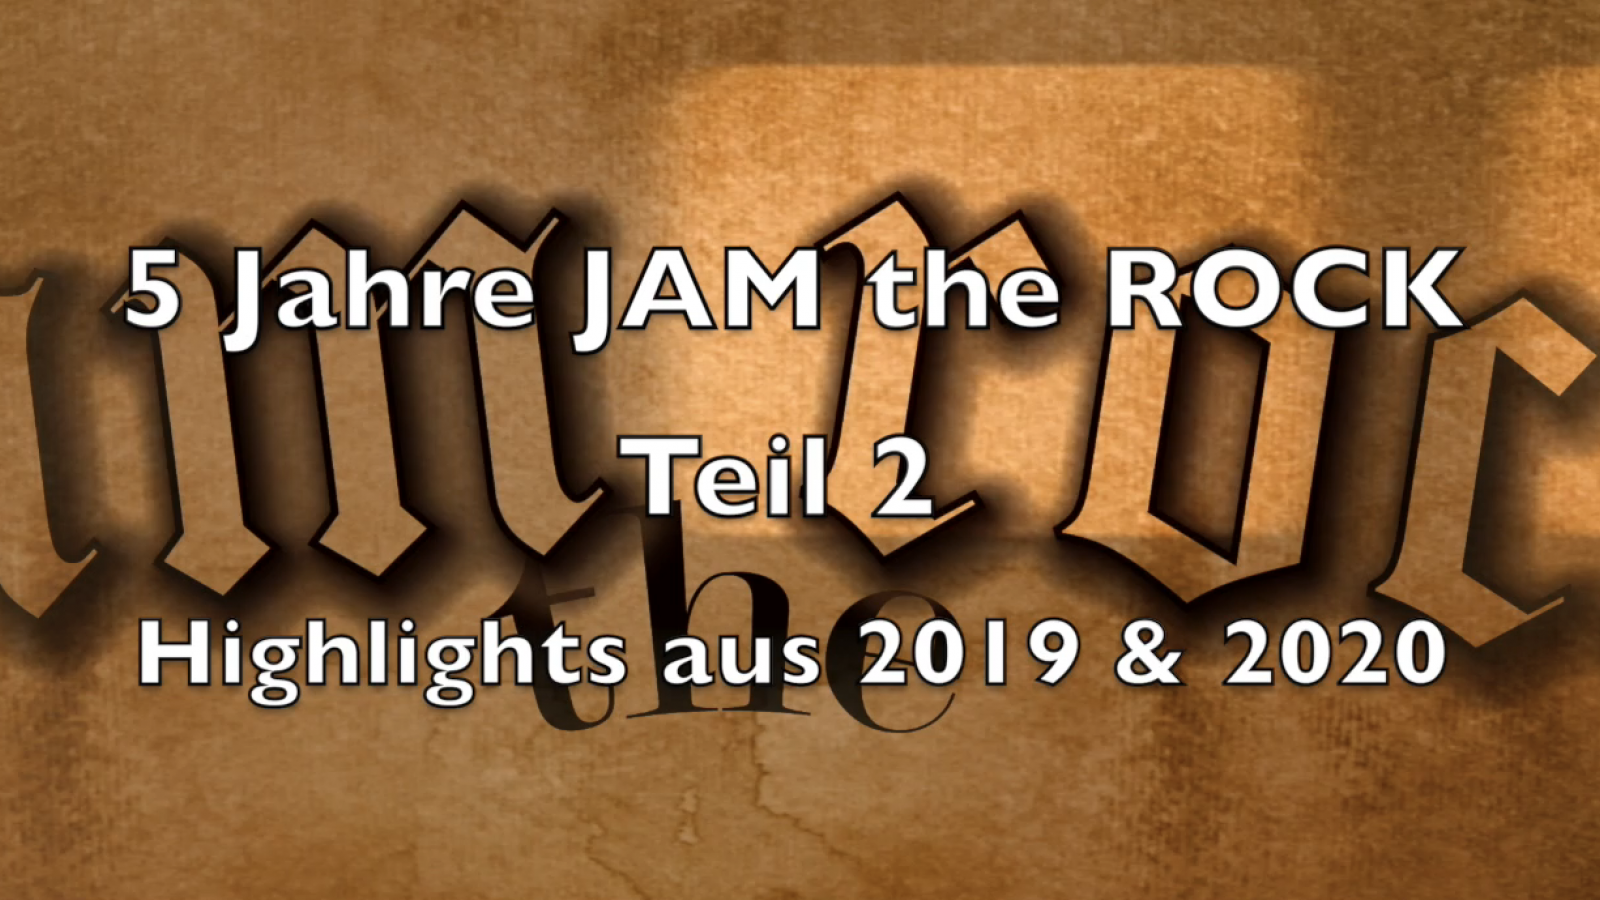 5 JAHRE JAM THE ROCK - TEIL 2